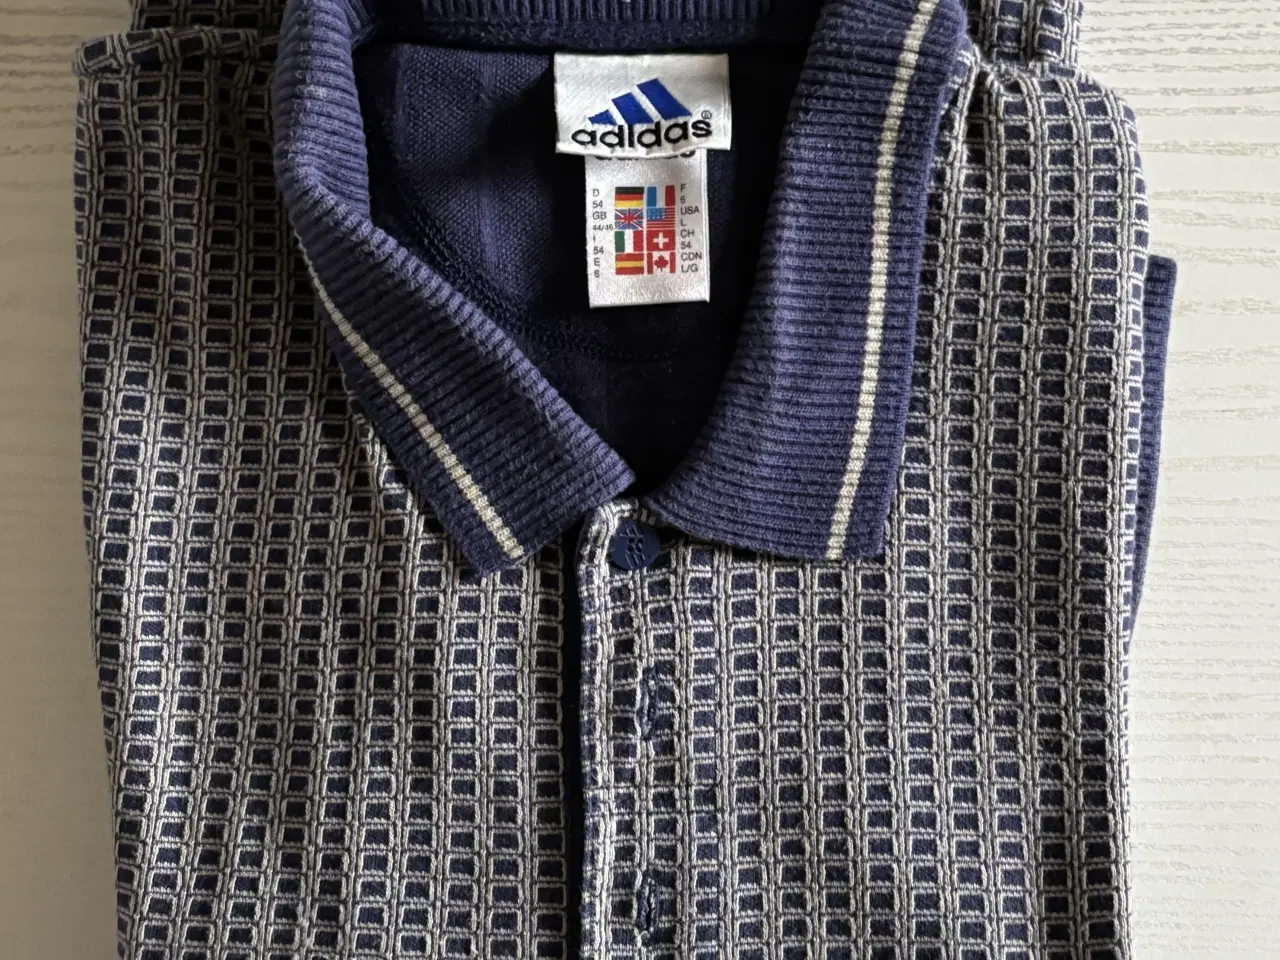 Billede 1 - Polo t-shirt, Adidas str. XL